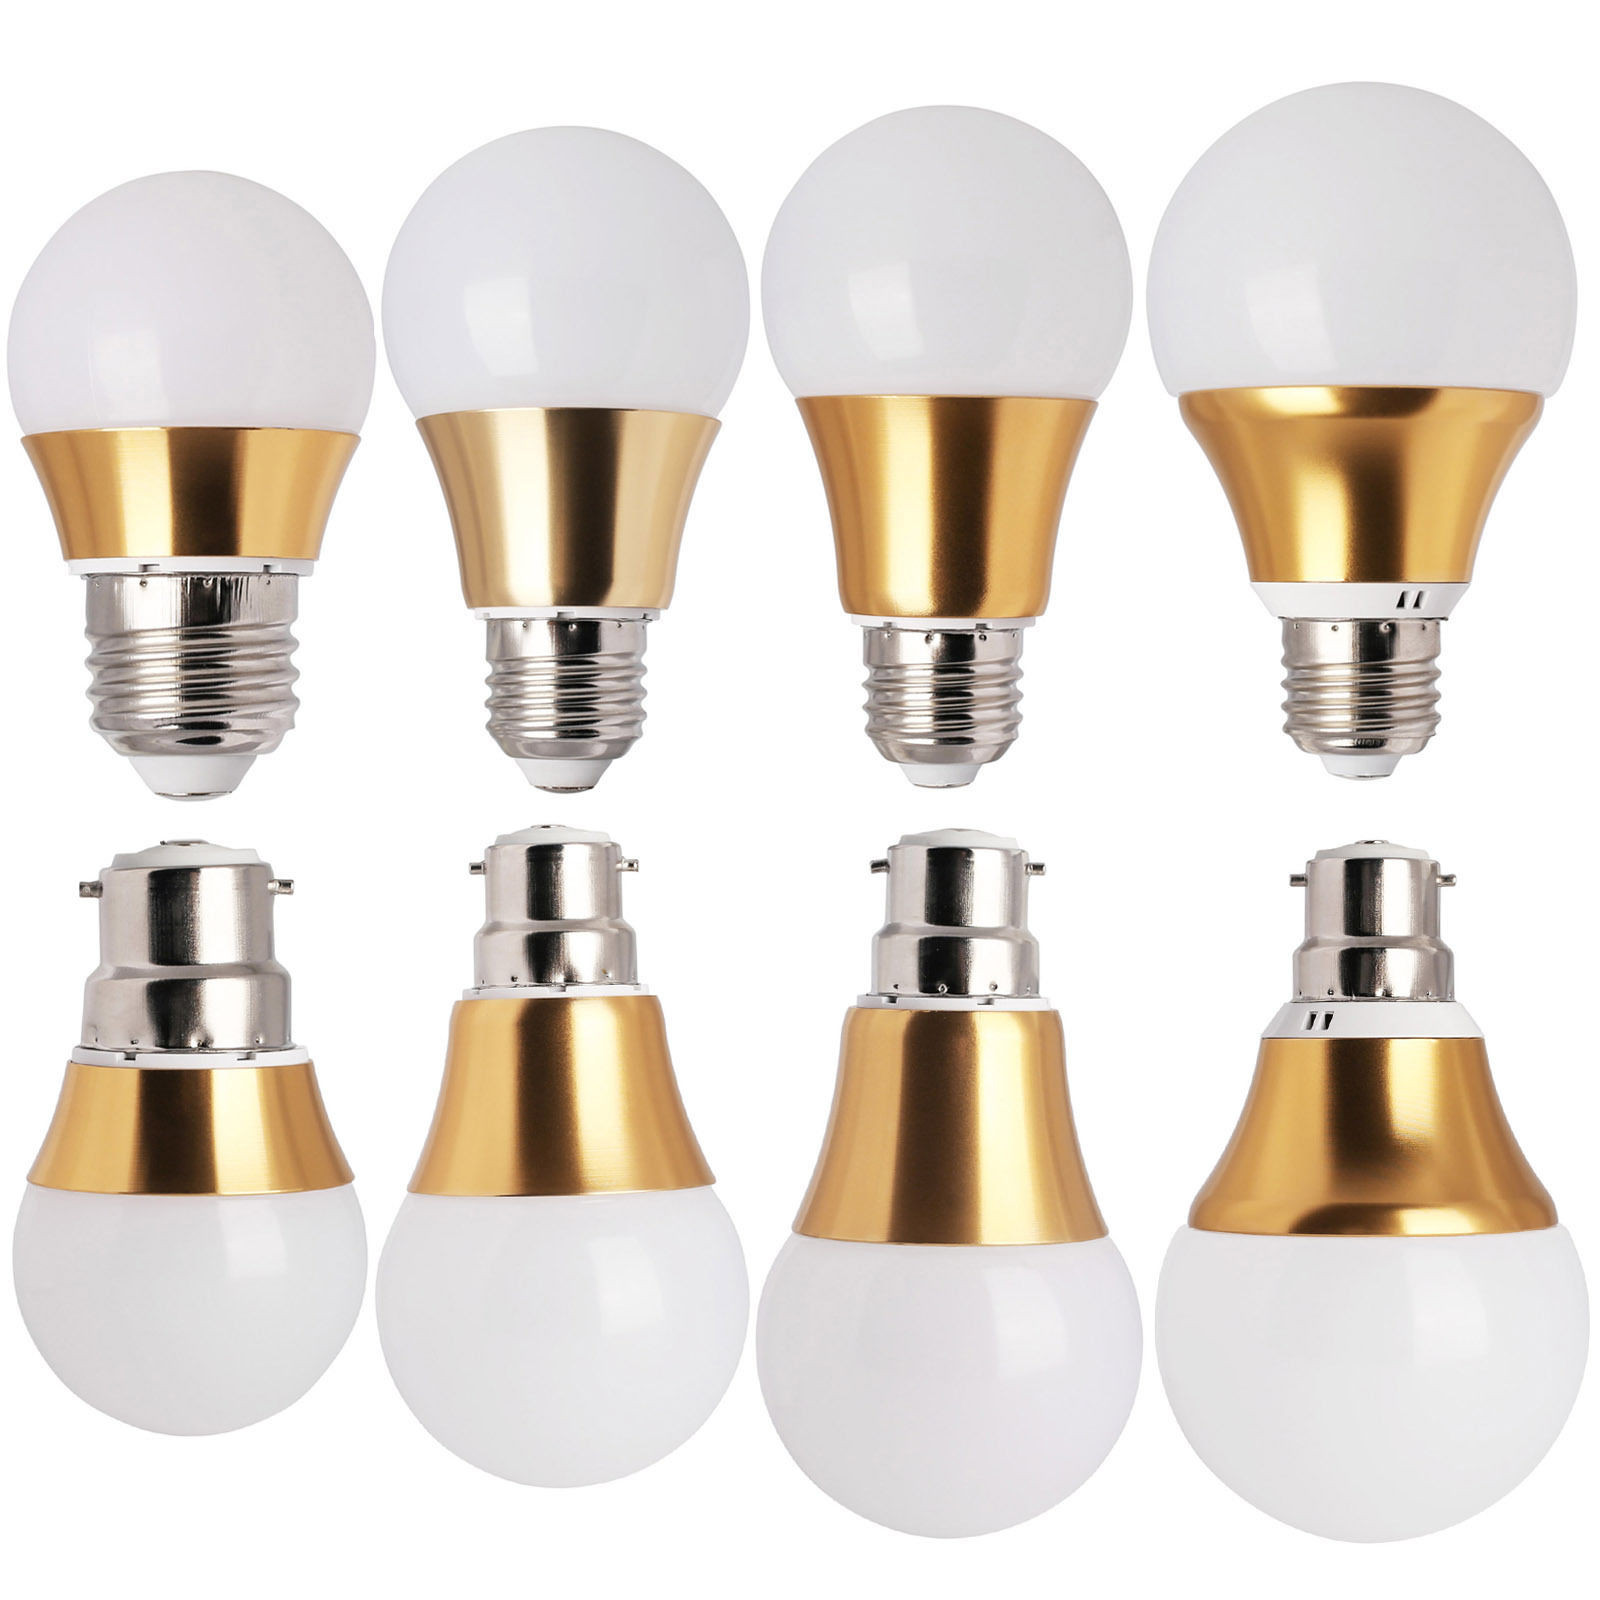 

Dimmable E27 B22 5W 10 SMD 5730 LED Pure White Warm White Globe Lighting Bulb AC220V